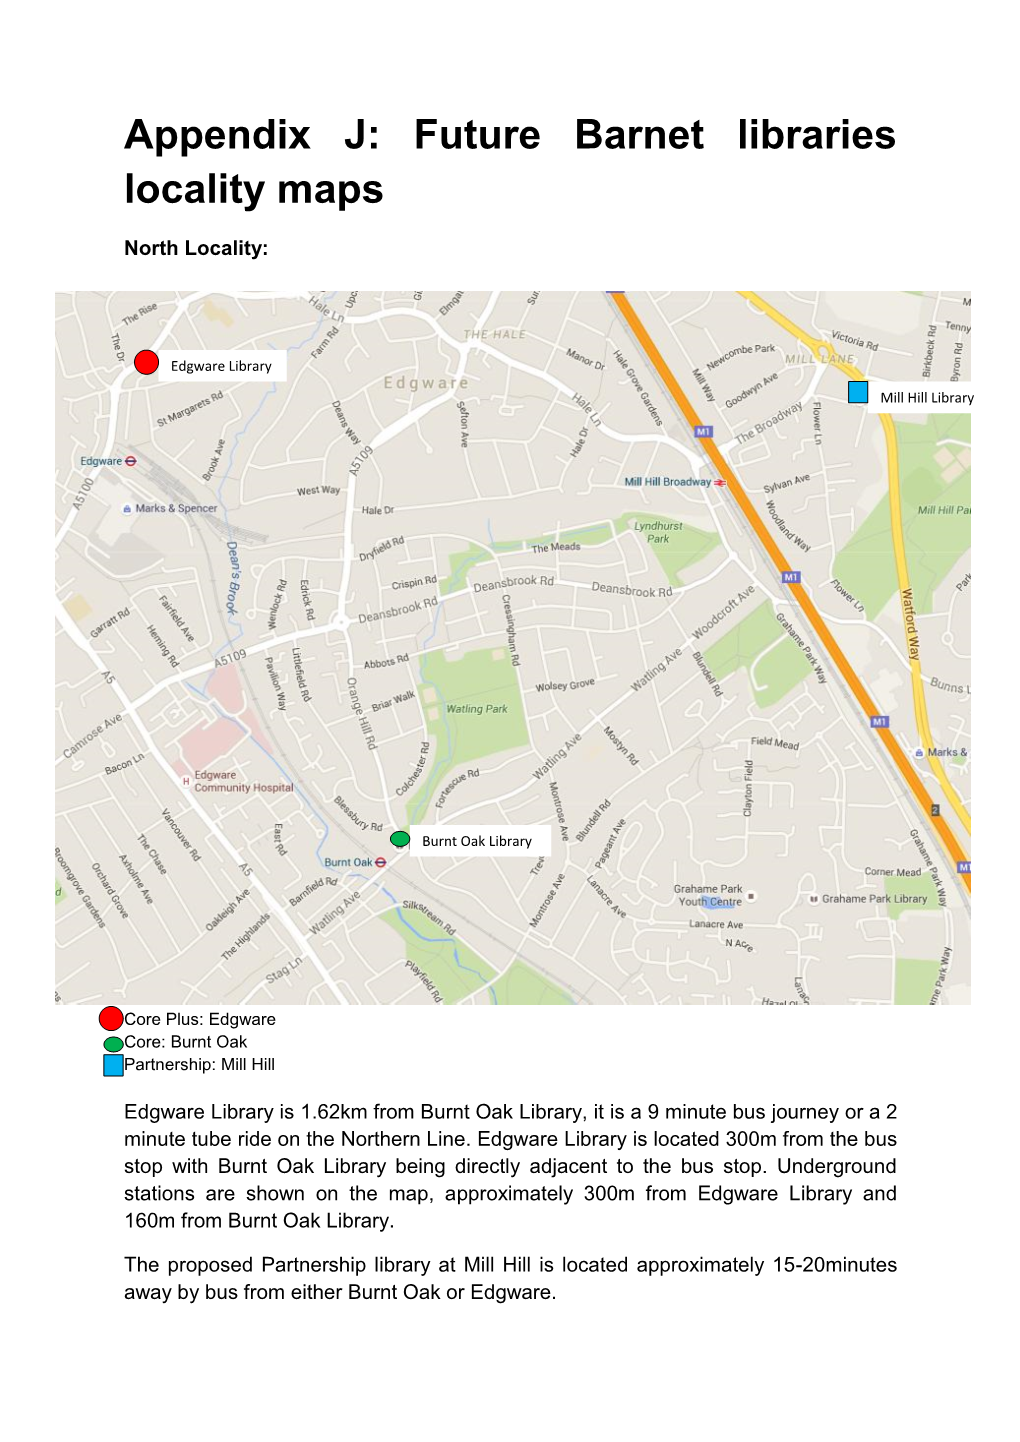 Appendix J: Future Barnet Libraries Locality Maps